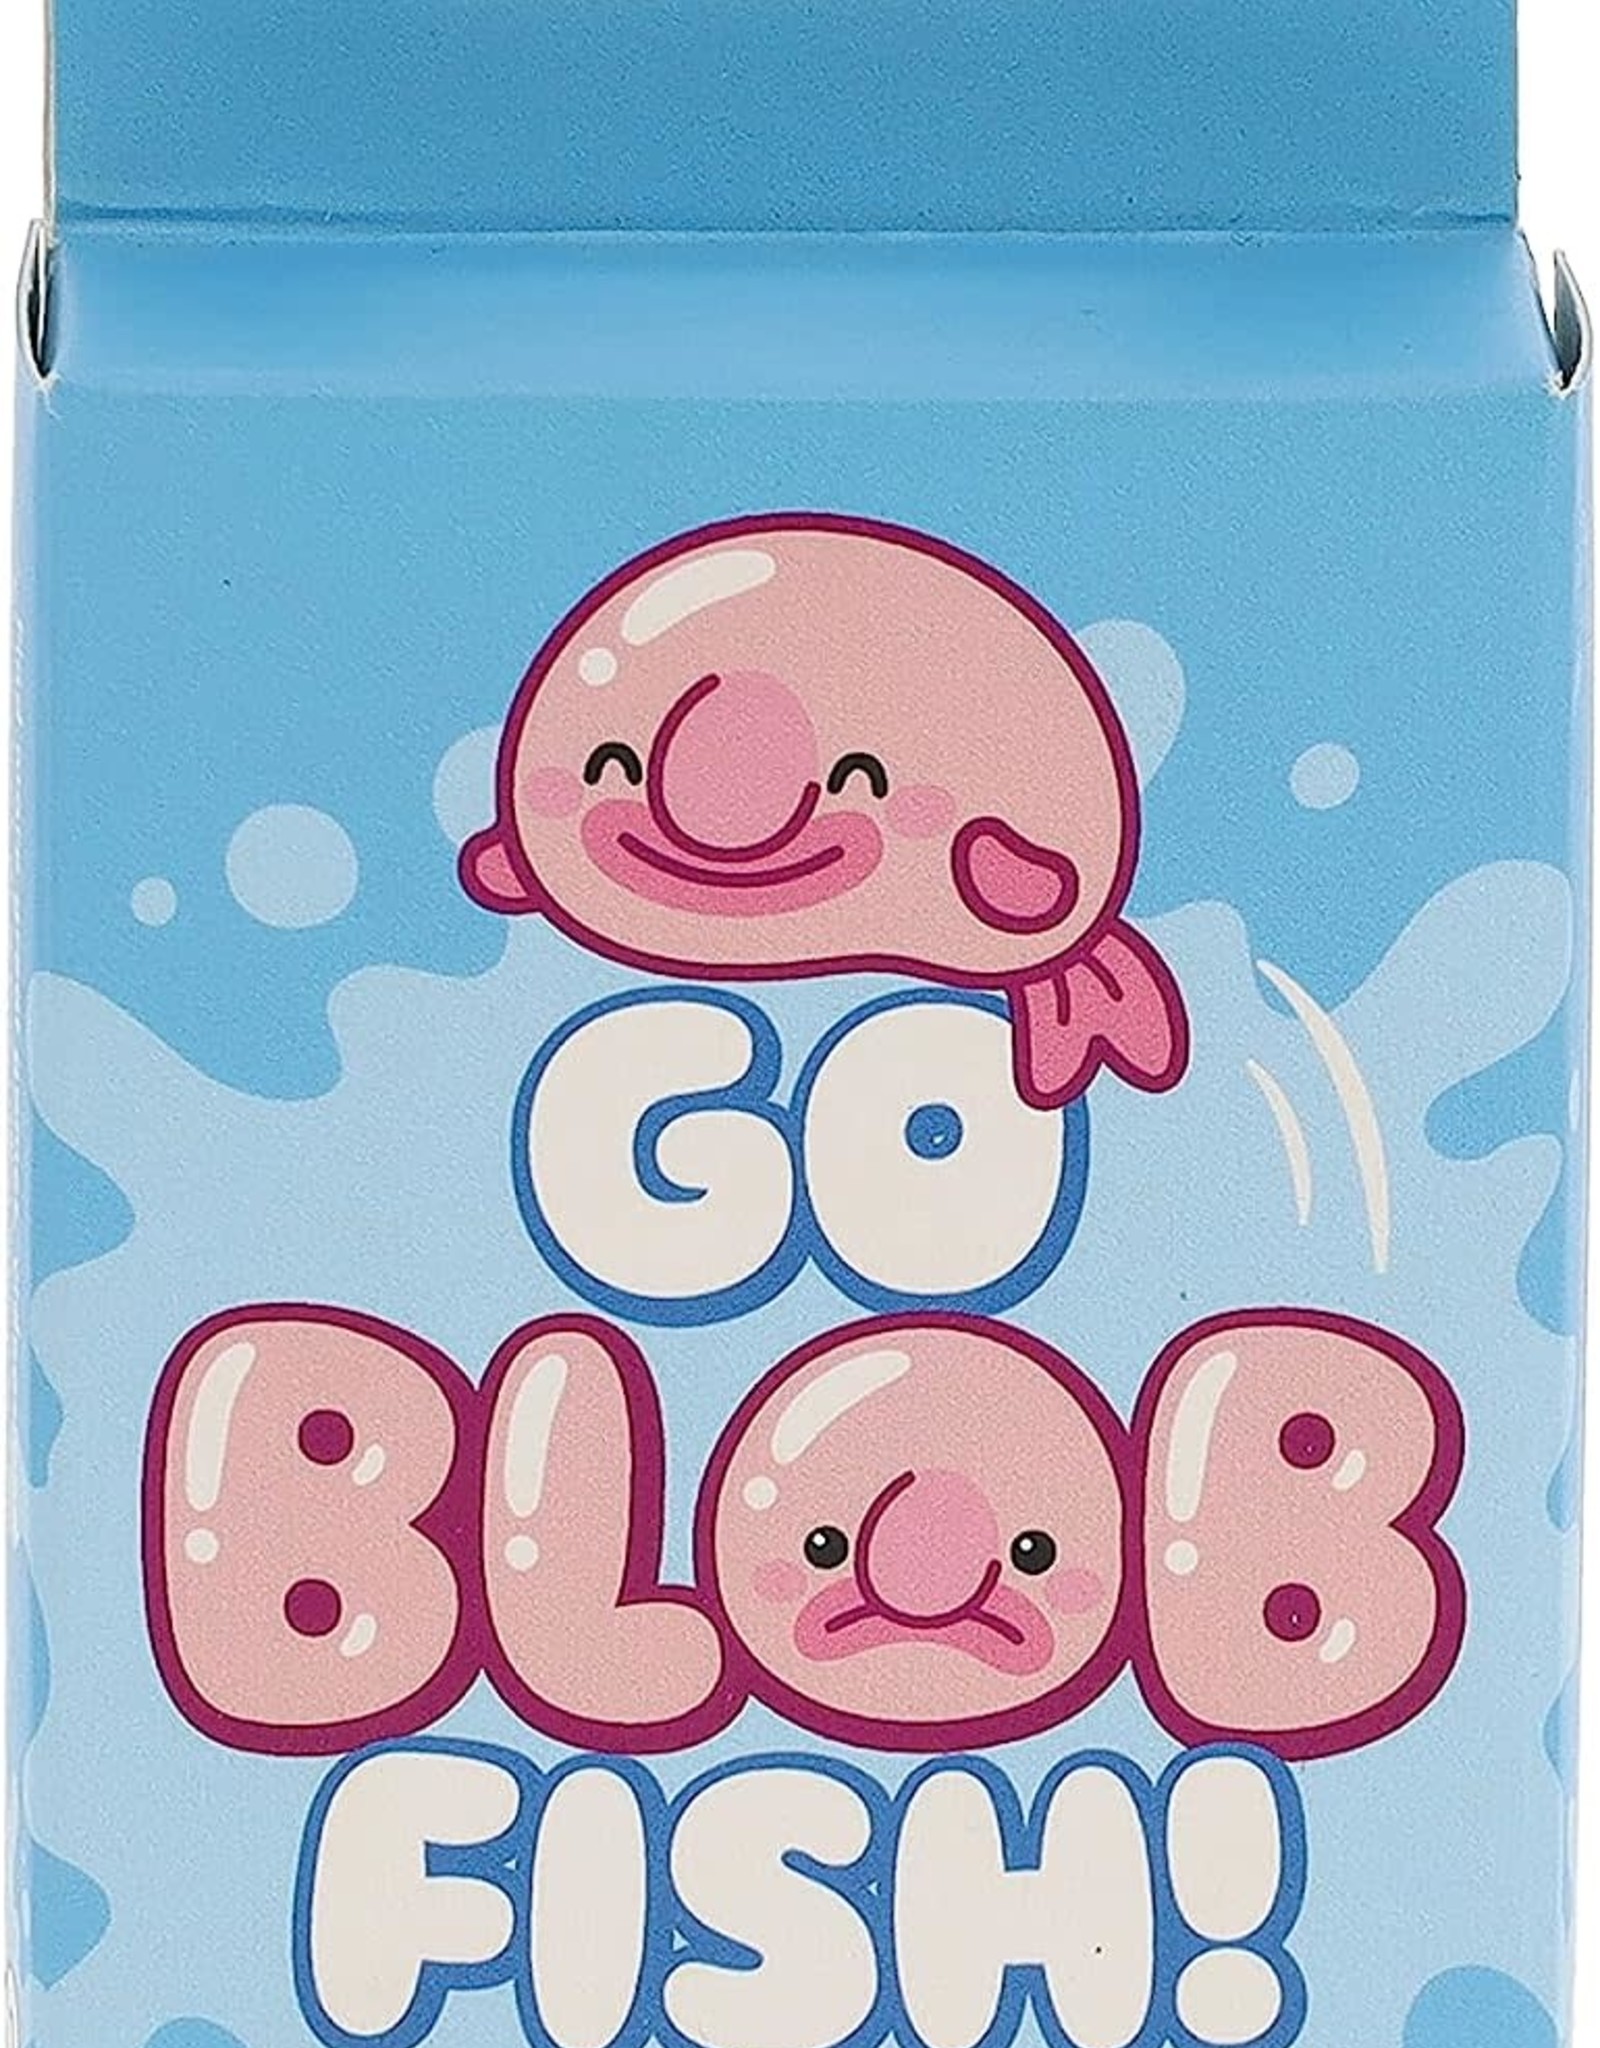 Go Blob Fish